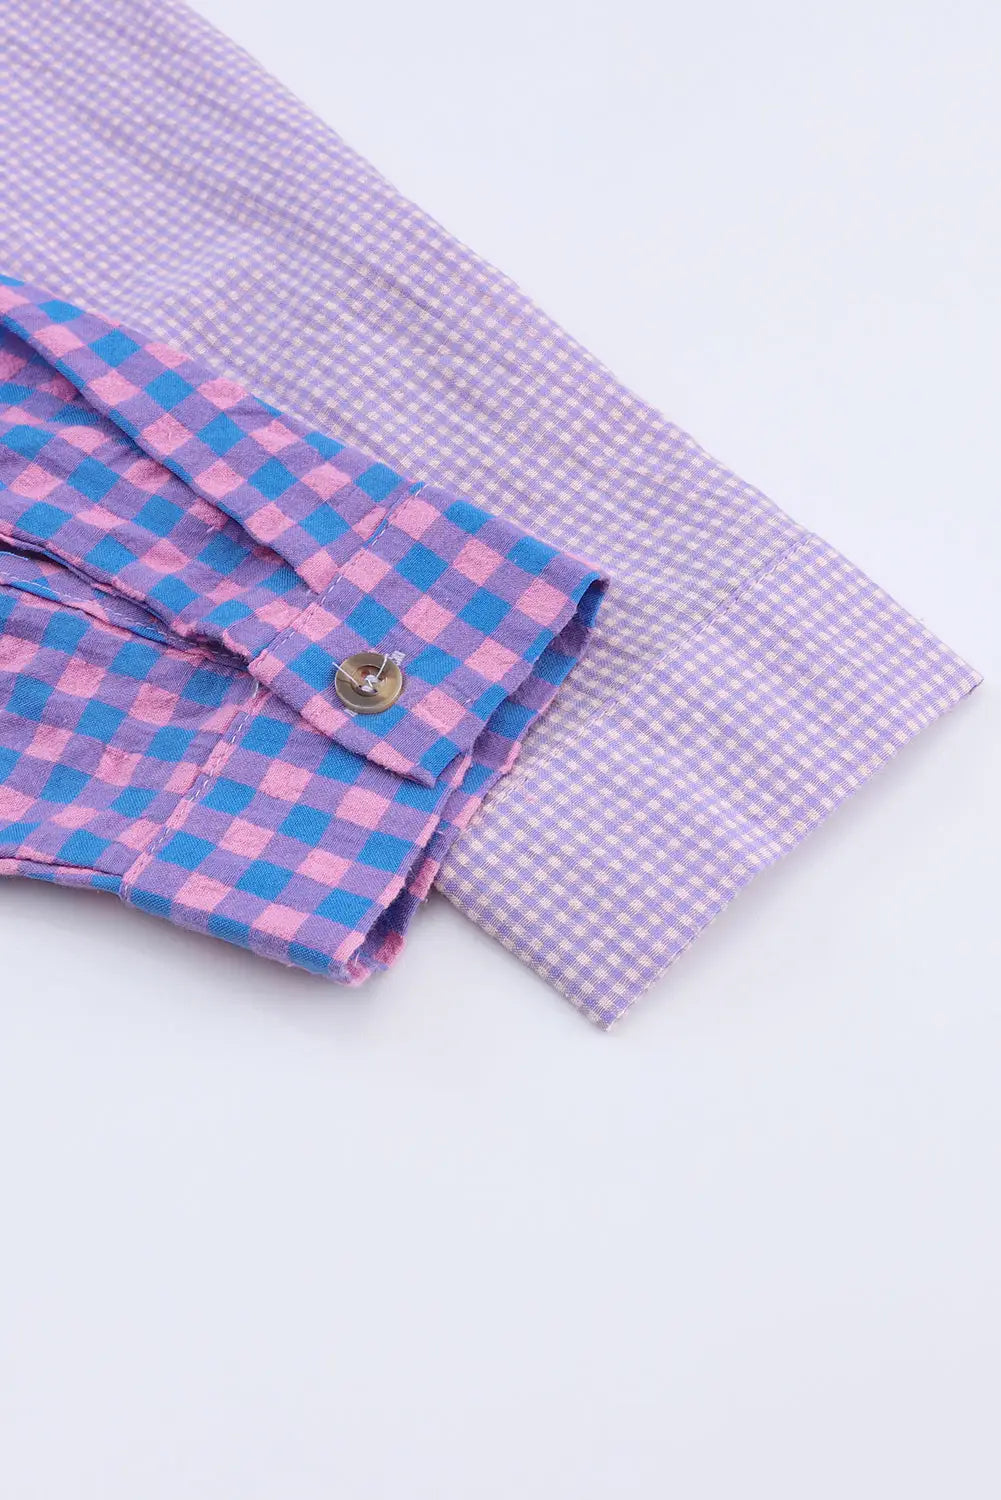 Purple mixed plaid button down long sleeve chest pocket shirt - blouses & shirts